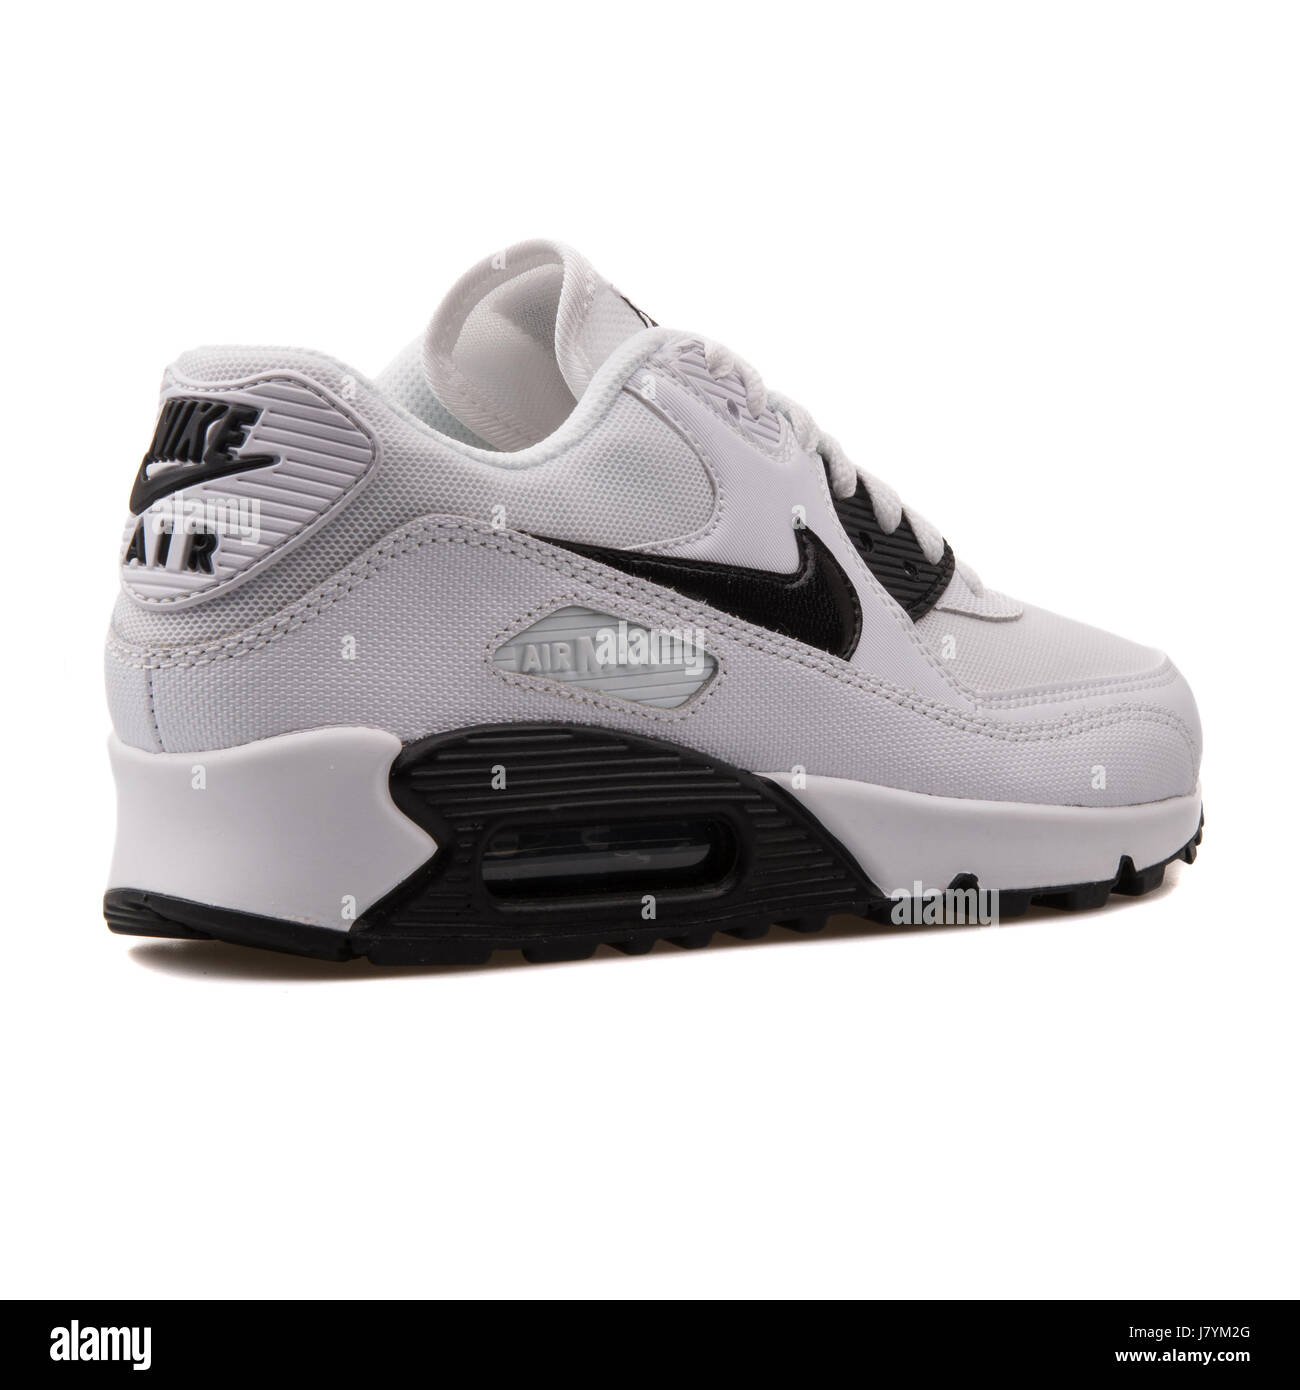 Wmn Nike Air Max 90 essentiel White Women's Sports Sneakers - 616730-110  Photo Stock - Alamy